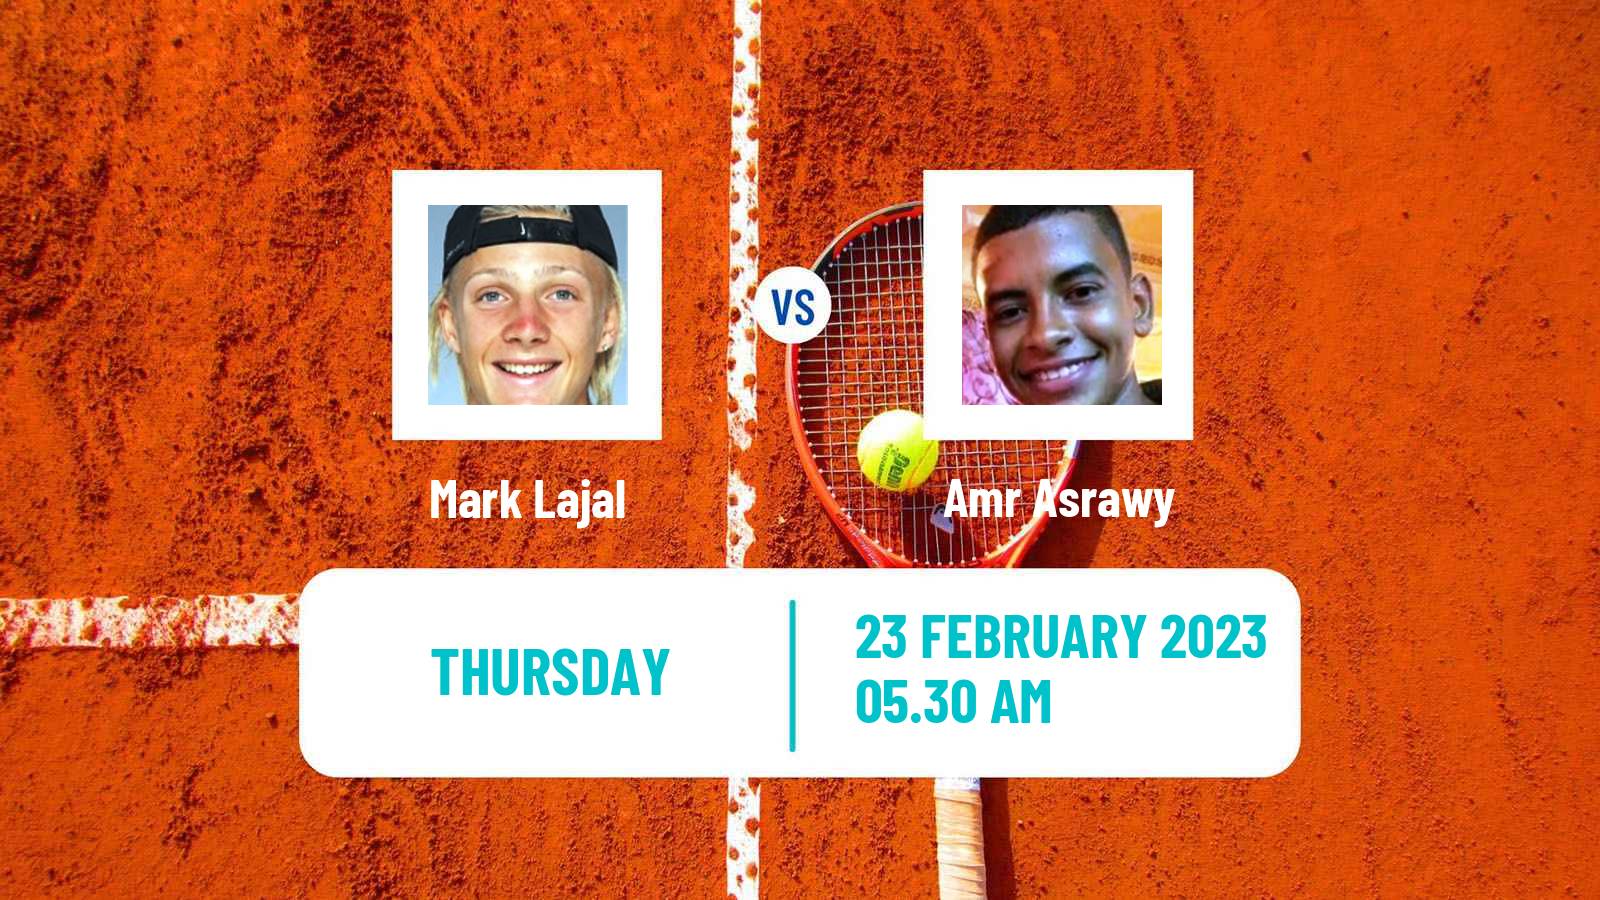 Tennis ITF Tournaments Mark Lajal - Amr Asrawy